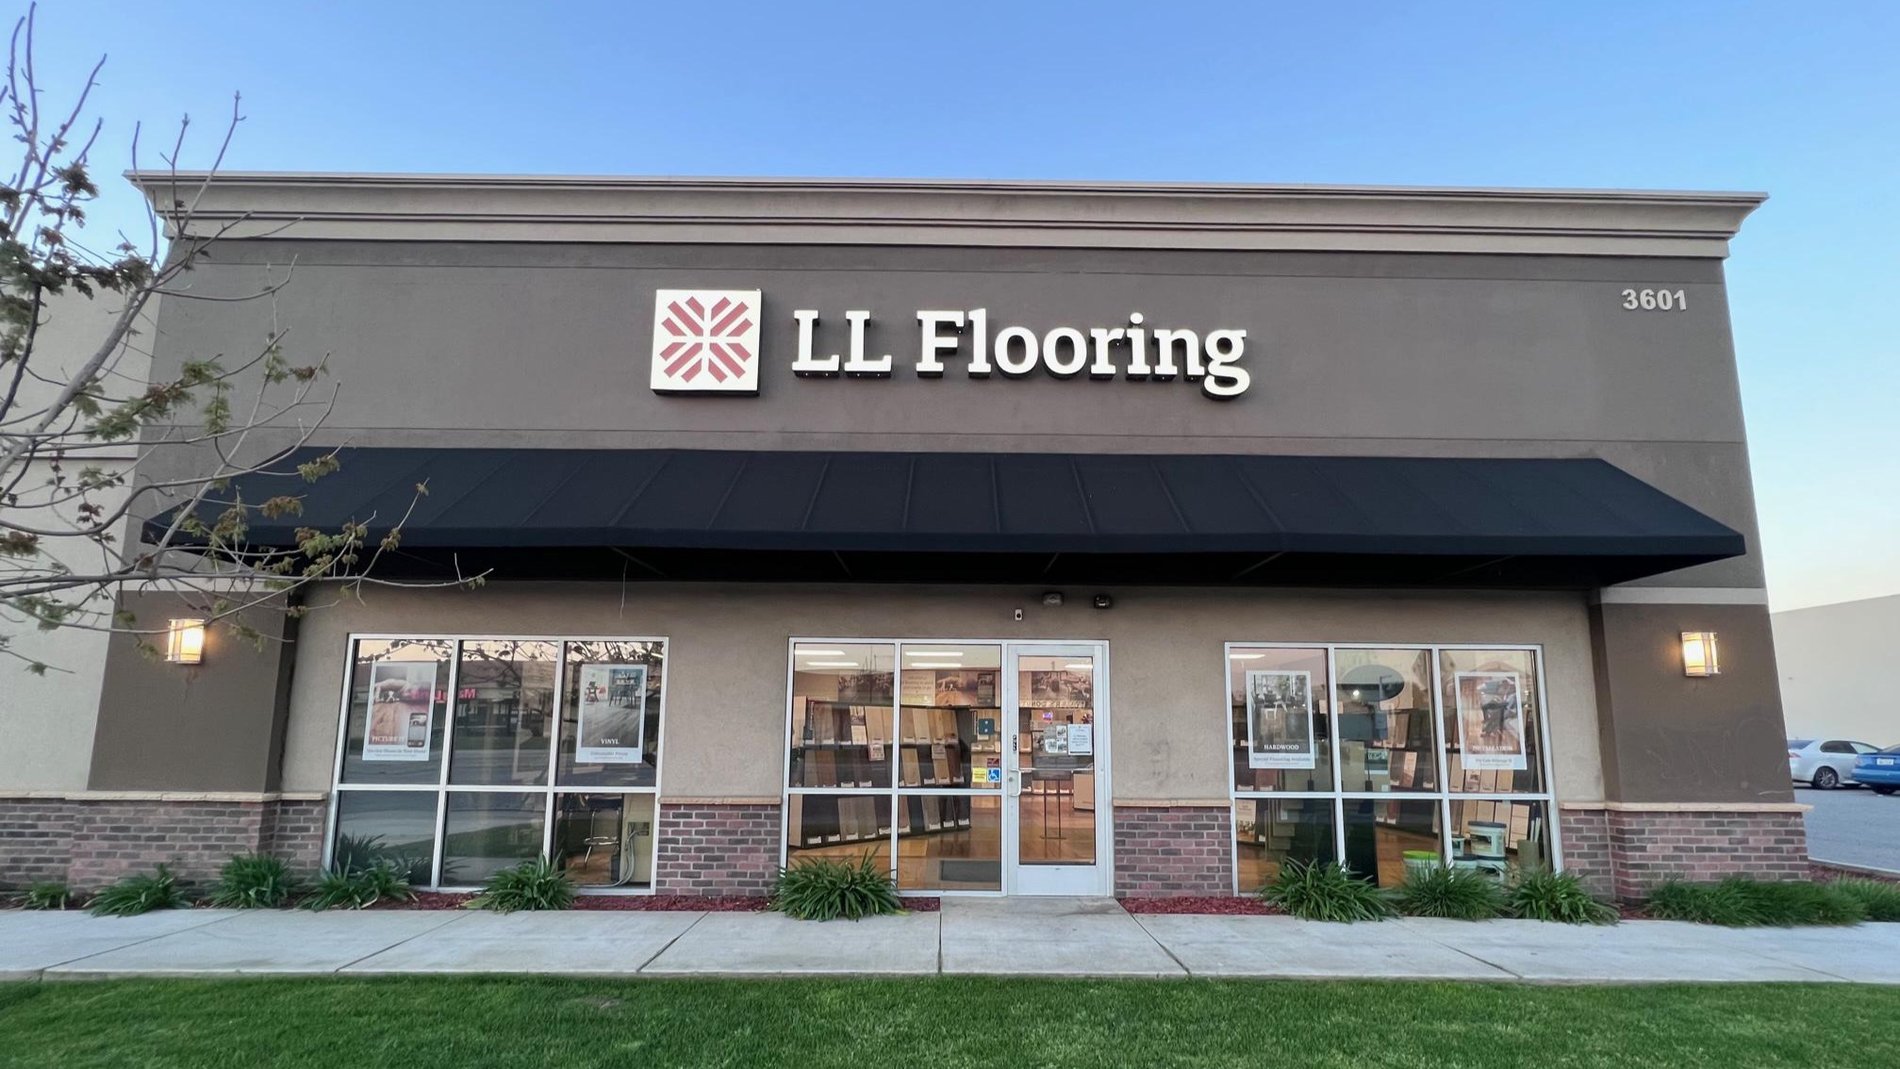 LL Flooring #1189 Bakersfield | 3601 Ming Avenue | Storefront